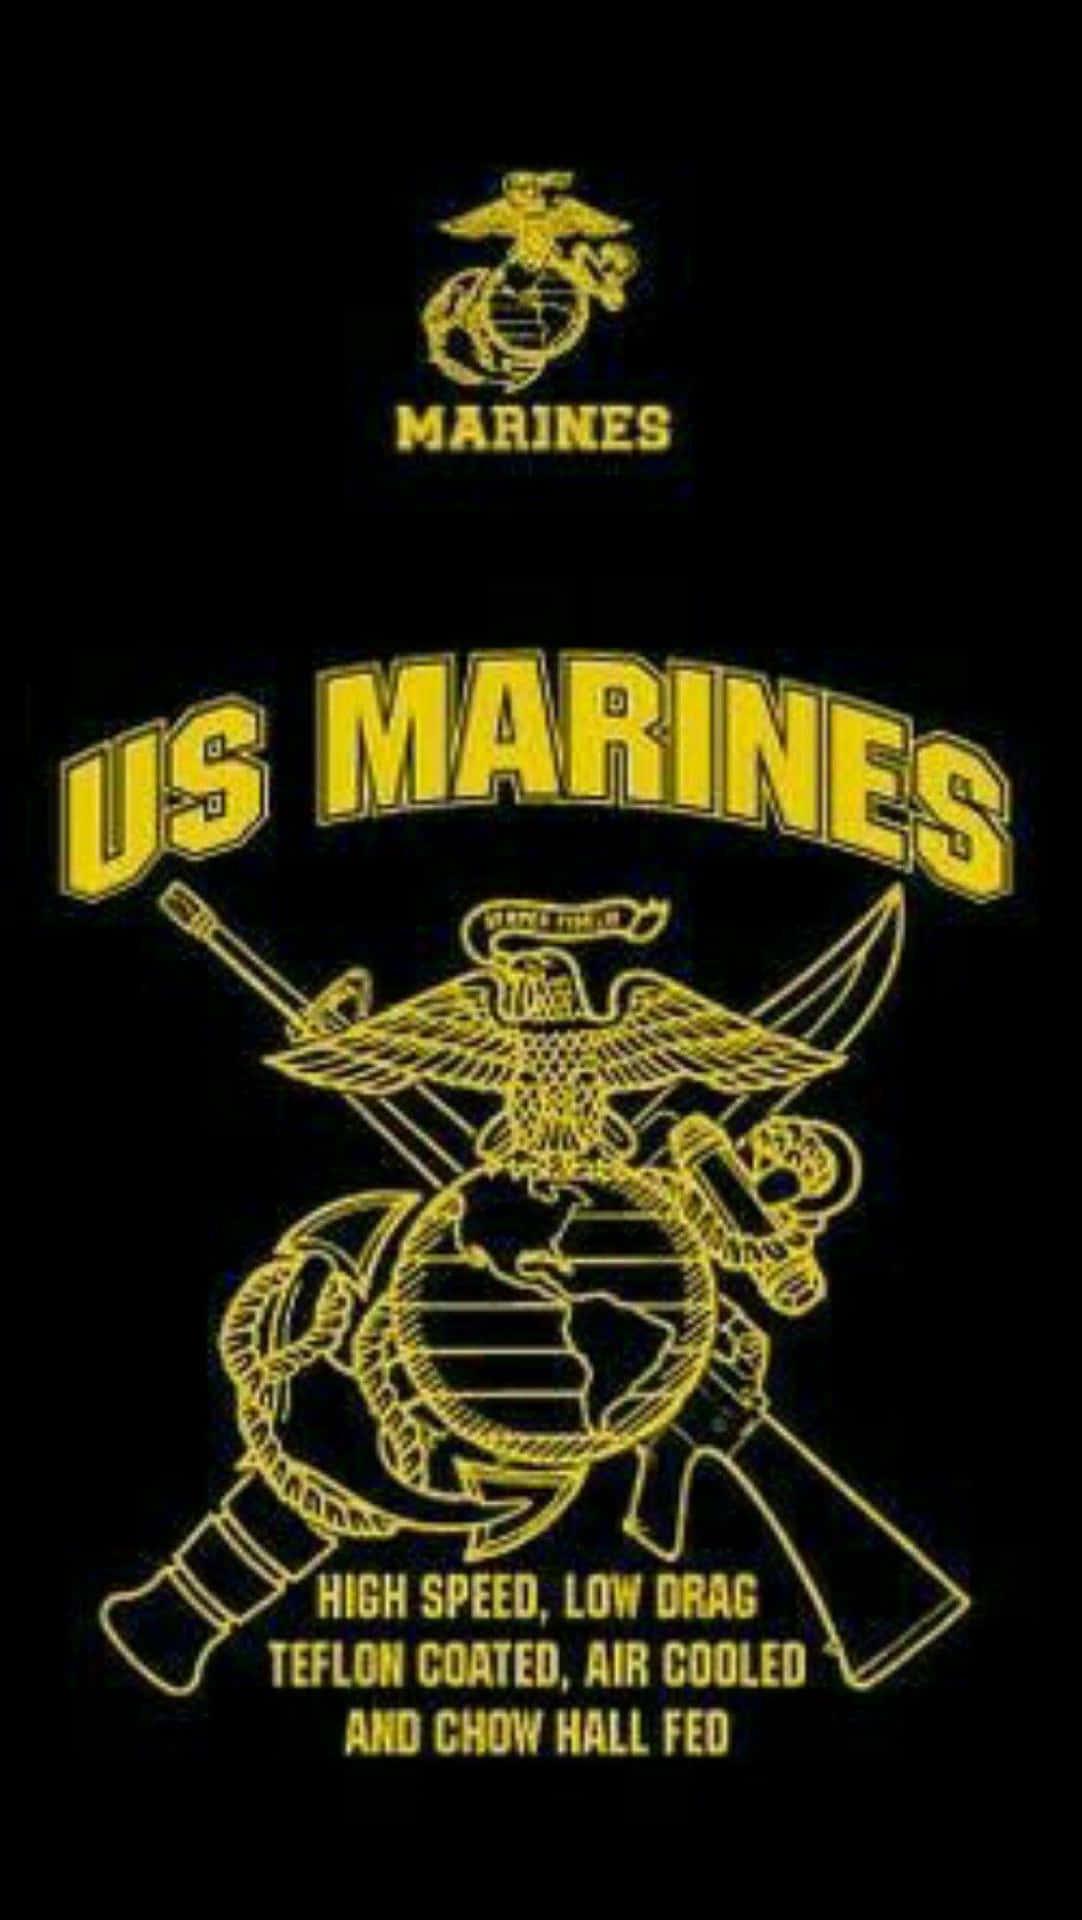 Vis din patriotisme med en US Marine Corps Iphone! Wallpaper